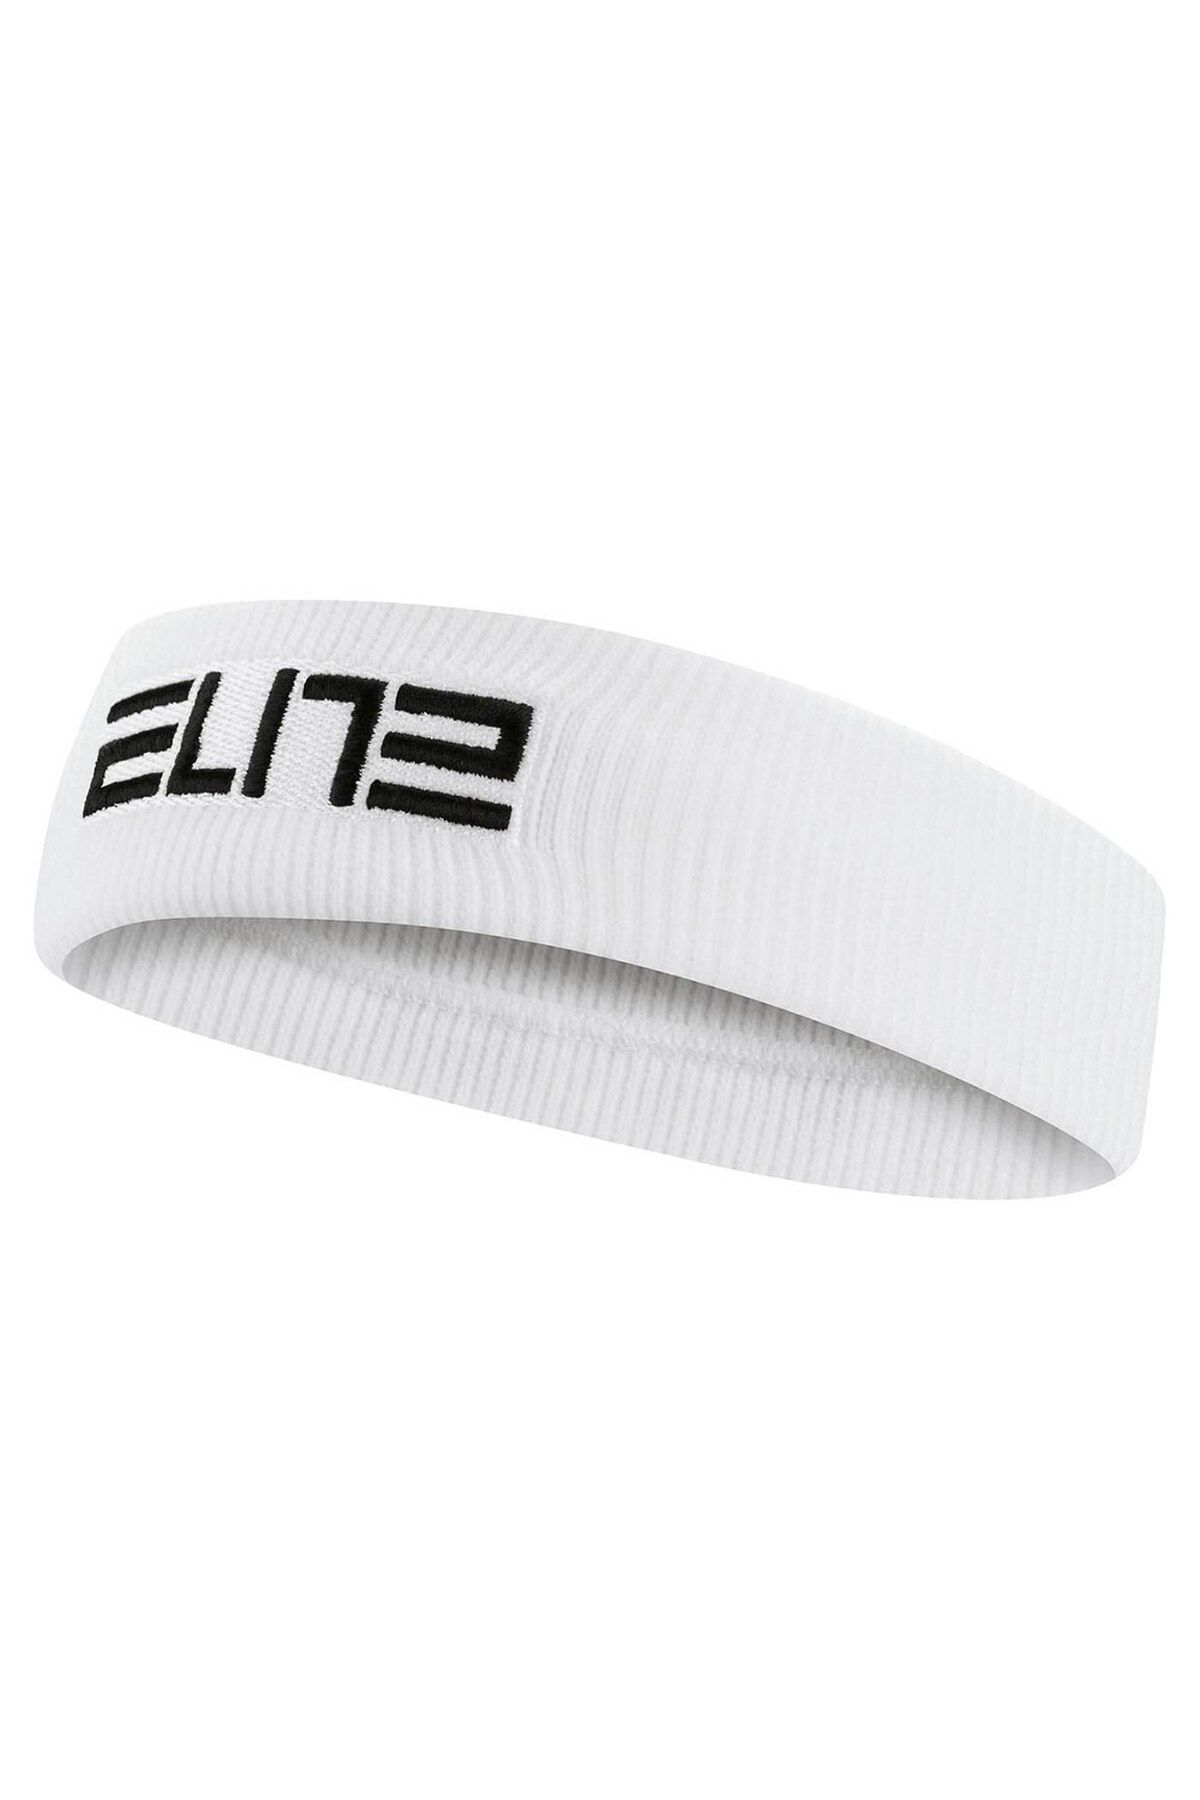 Nike Elite Headband Erkek Saç Bandı